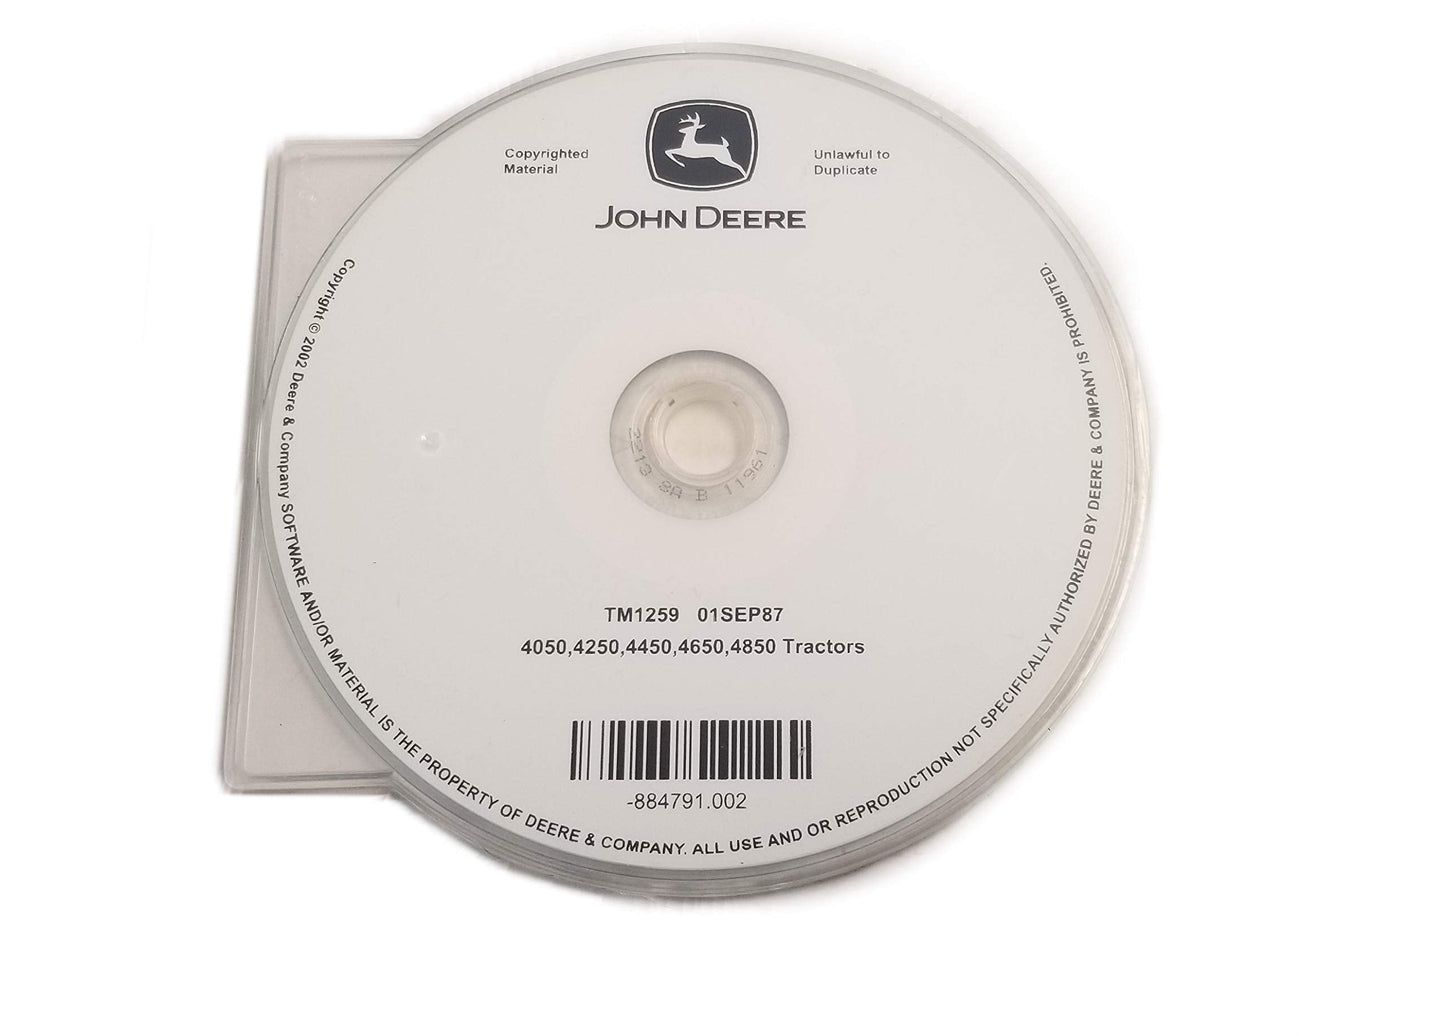 John Deere 4050/4250/4450/4650/4850 Tractors Technical Manual CD - TM1259CD